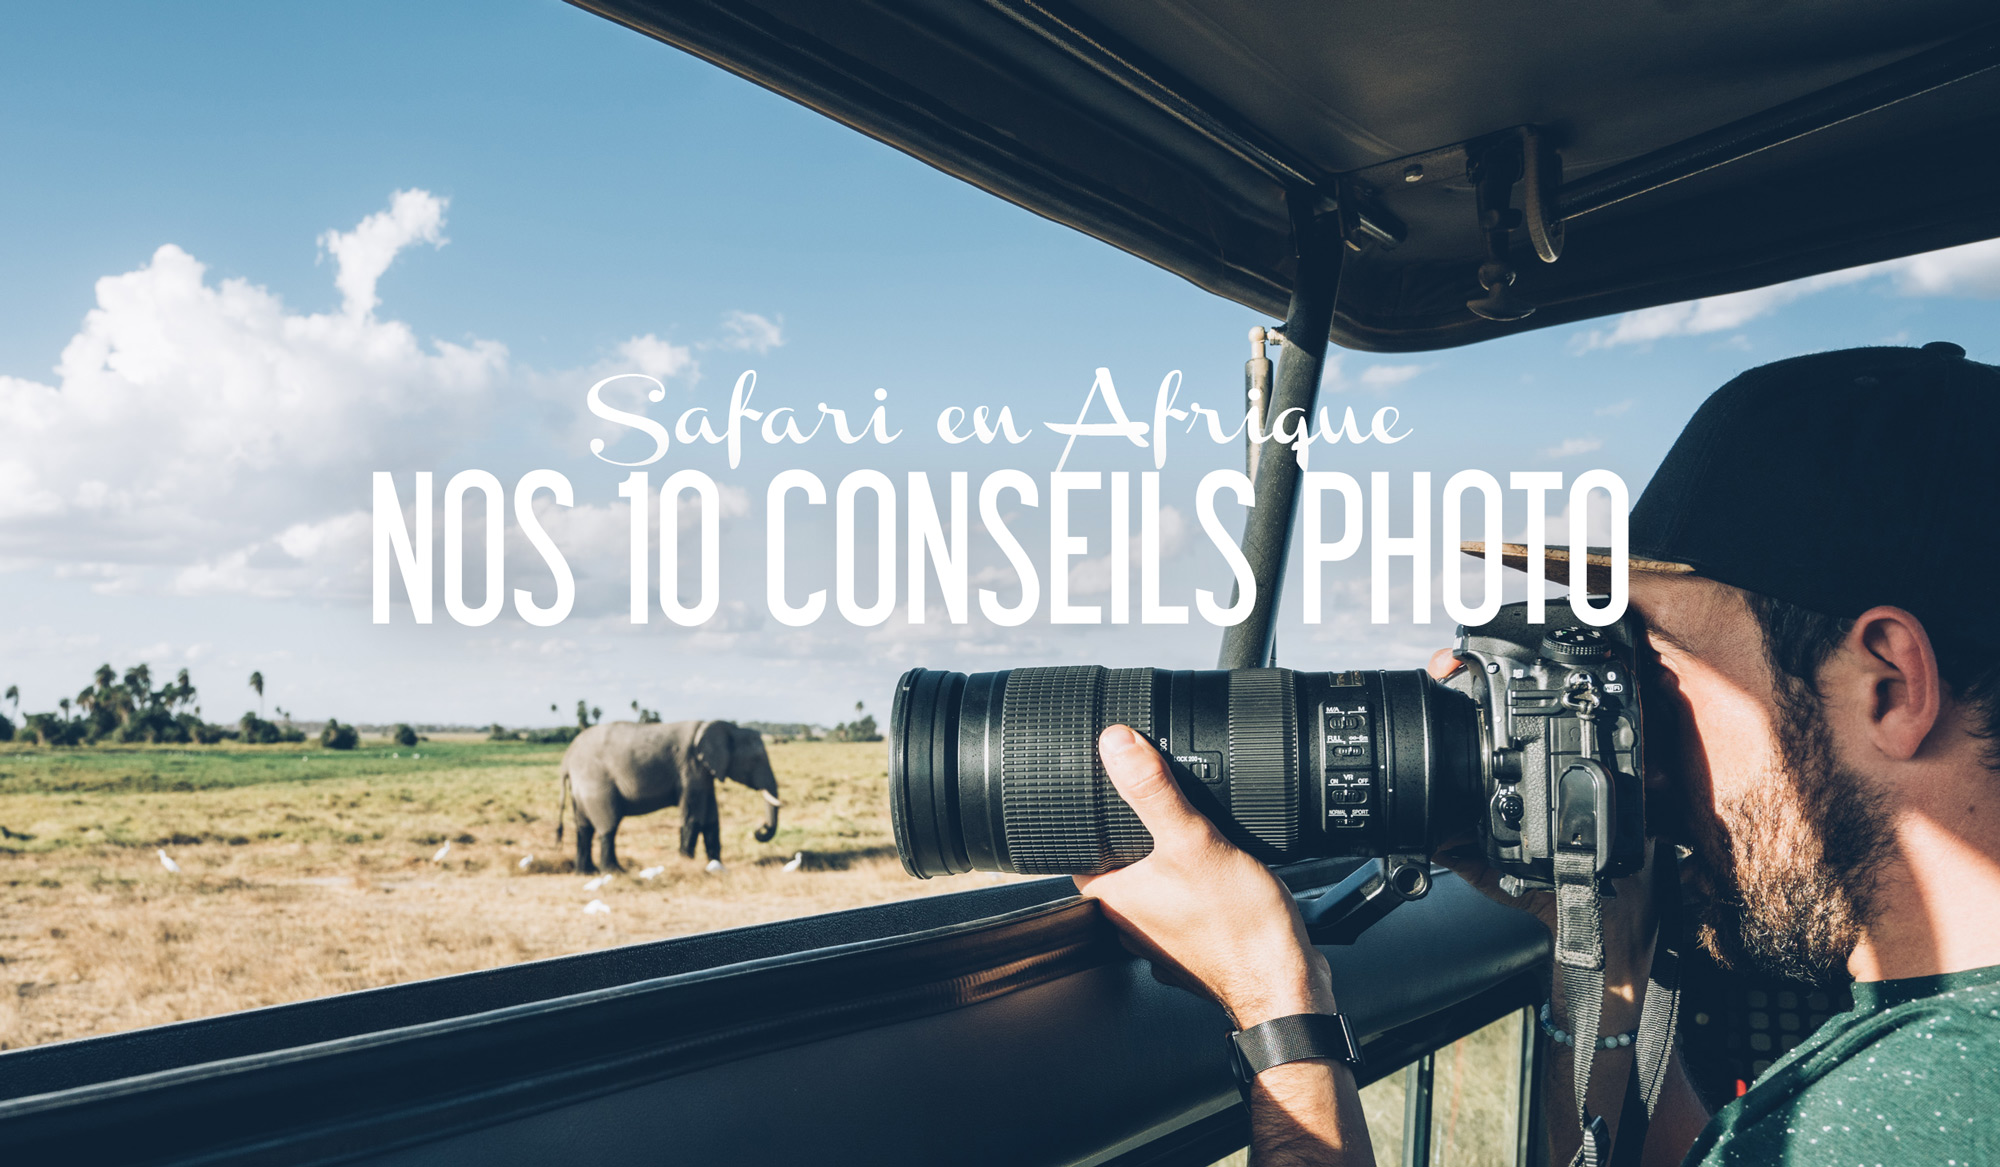 Nos 10 conseils photo pour réussir vos photos en Safari en Afrique